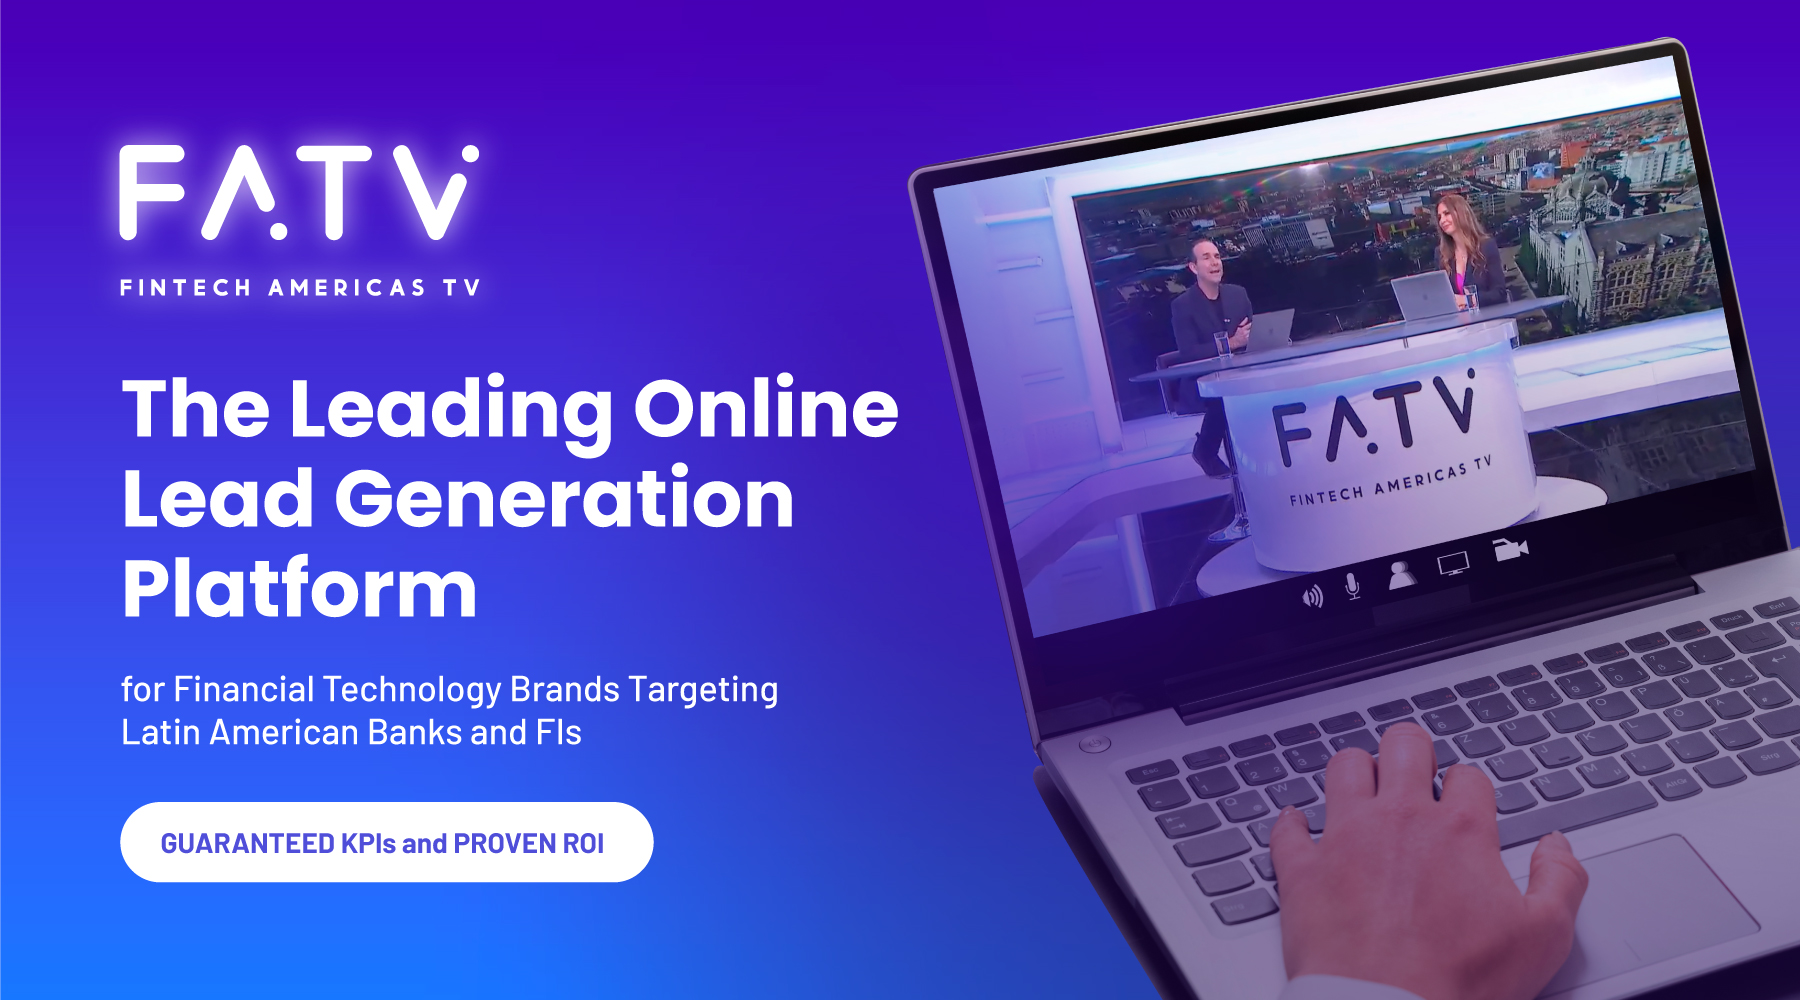 FATV - The Leading Online Lead Generation Platform